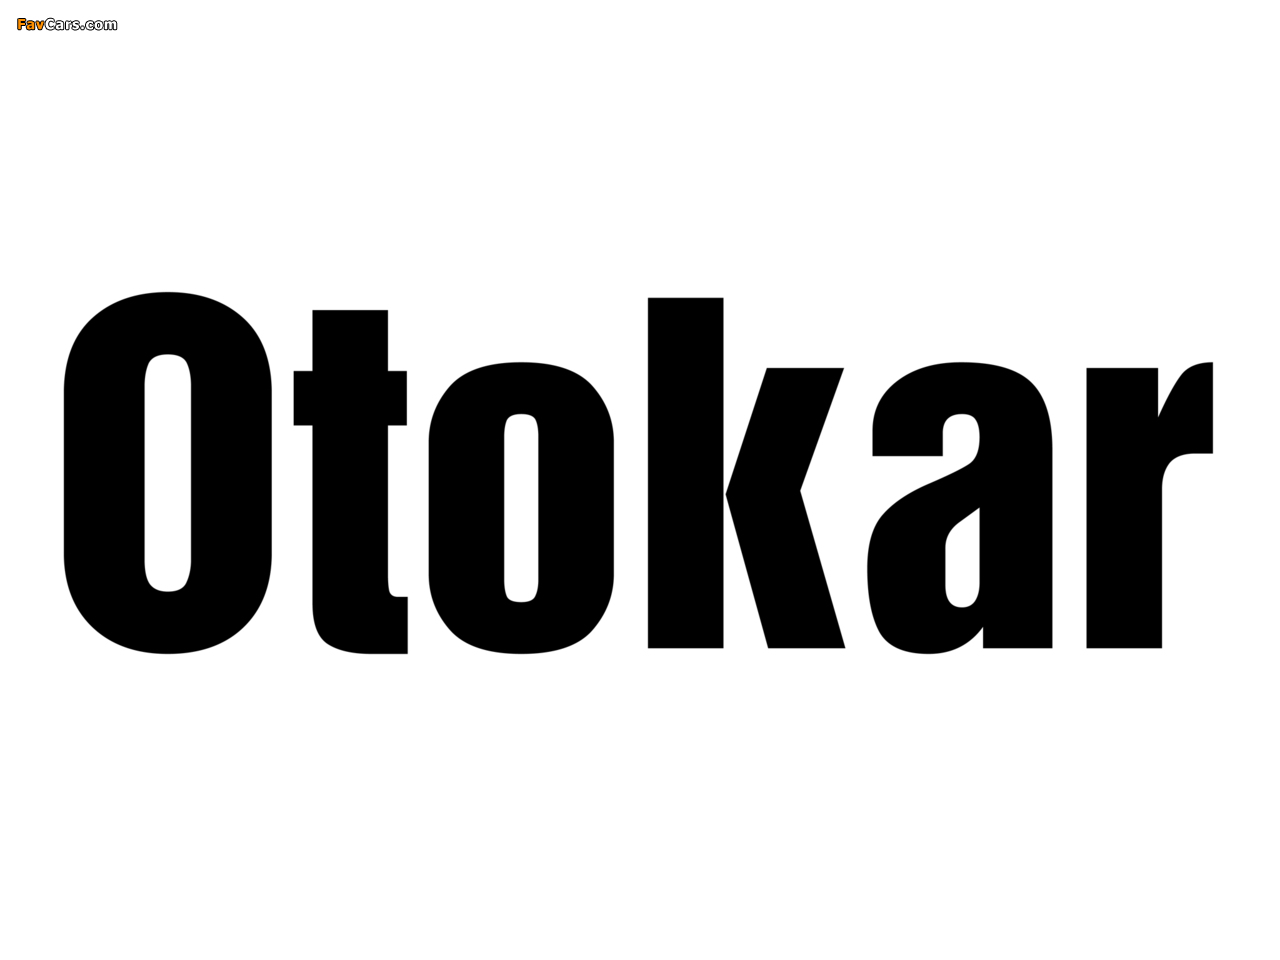 Otokar images (1280 x 960)